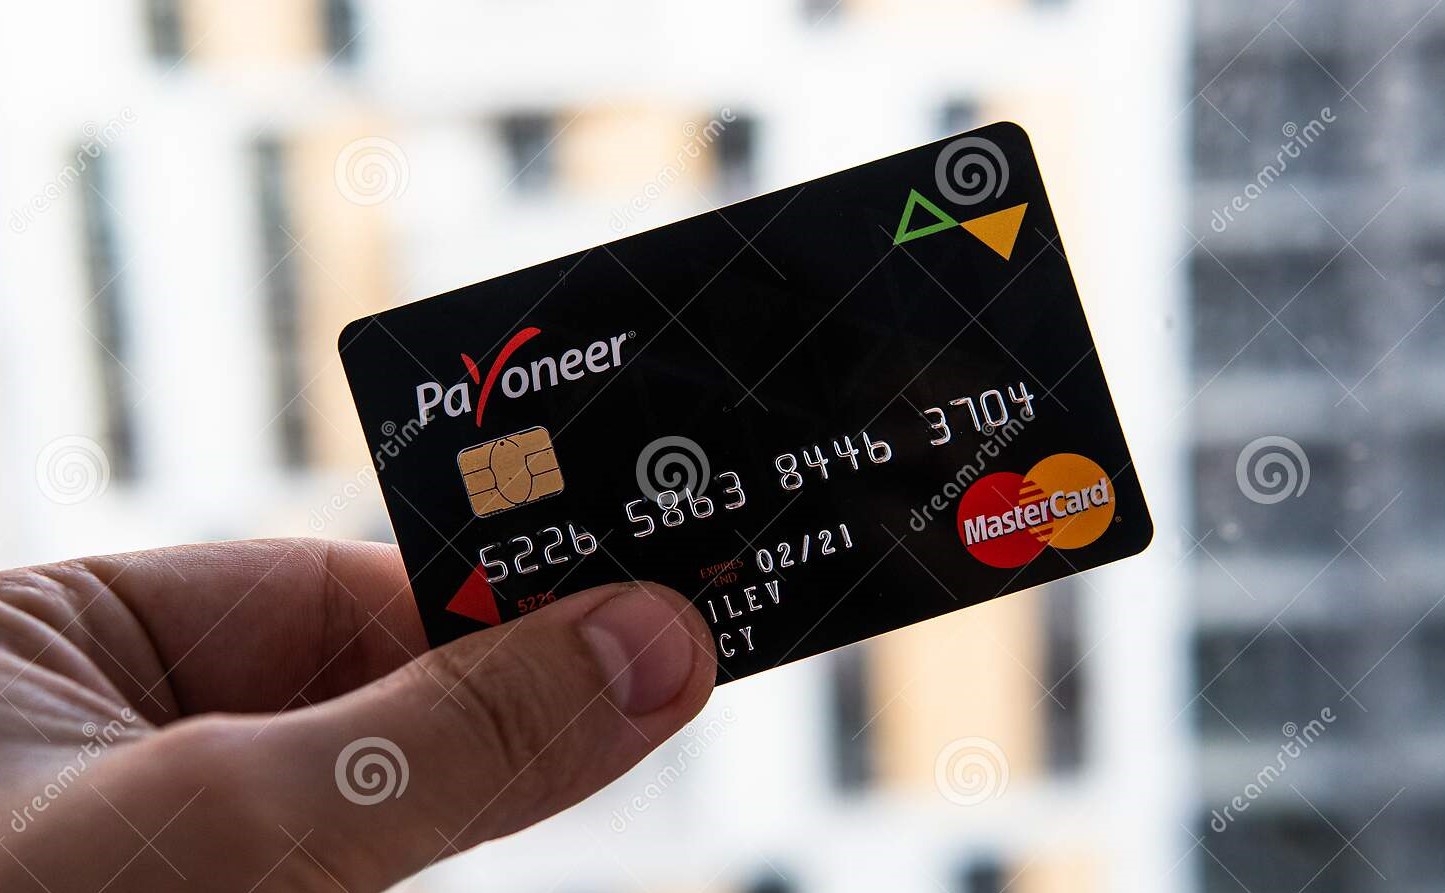 30464USA Virtual Card MasterCard VisaCard With Bank Access